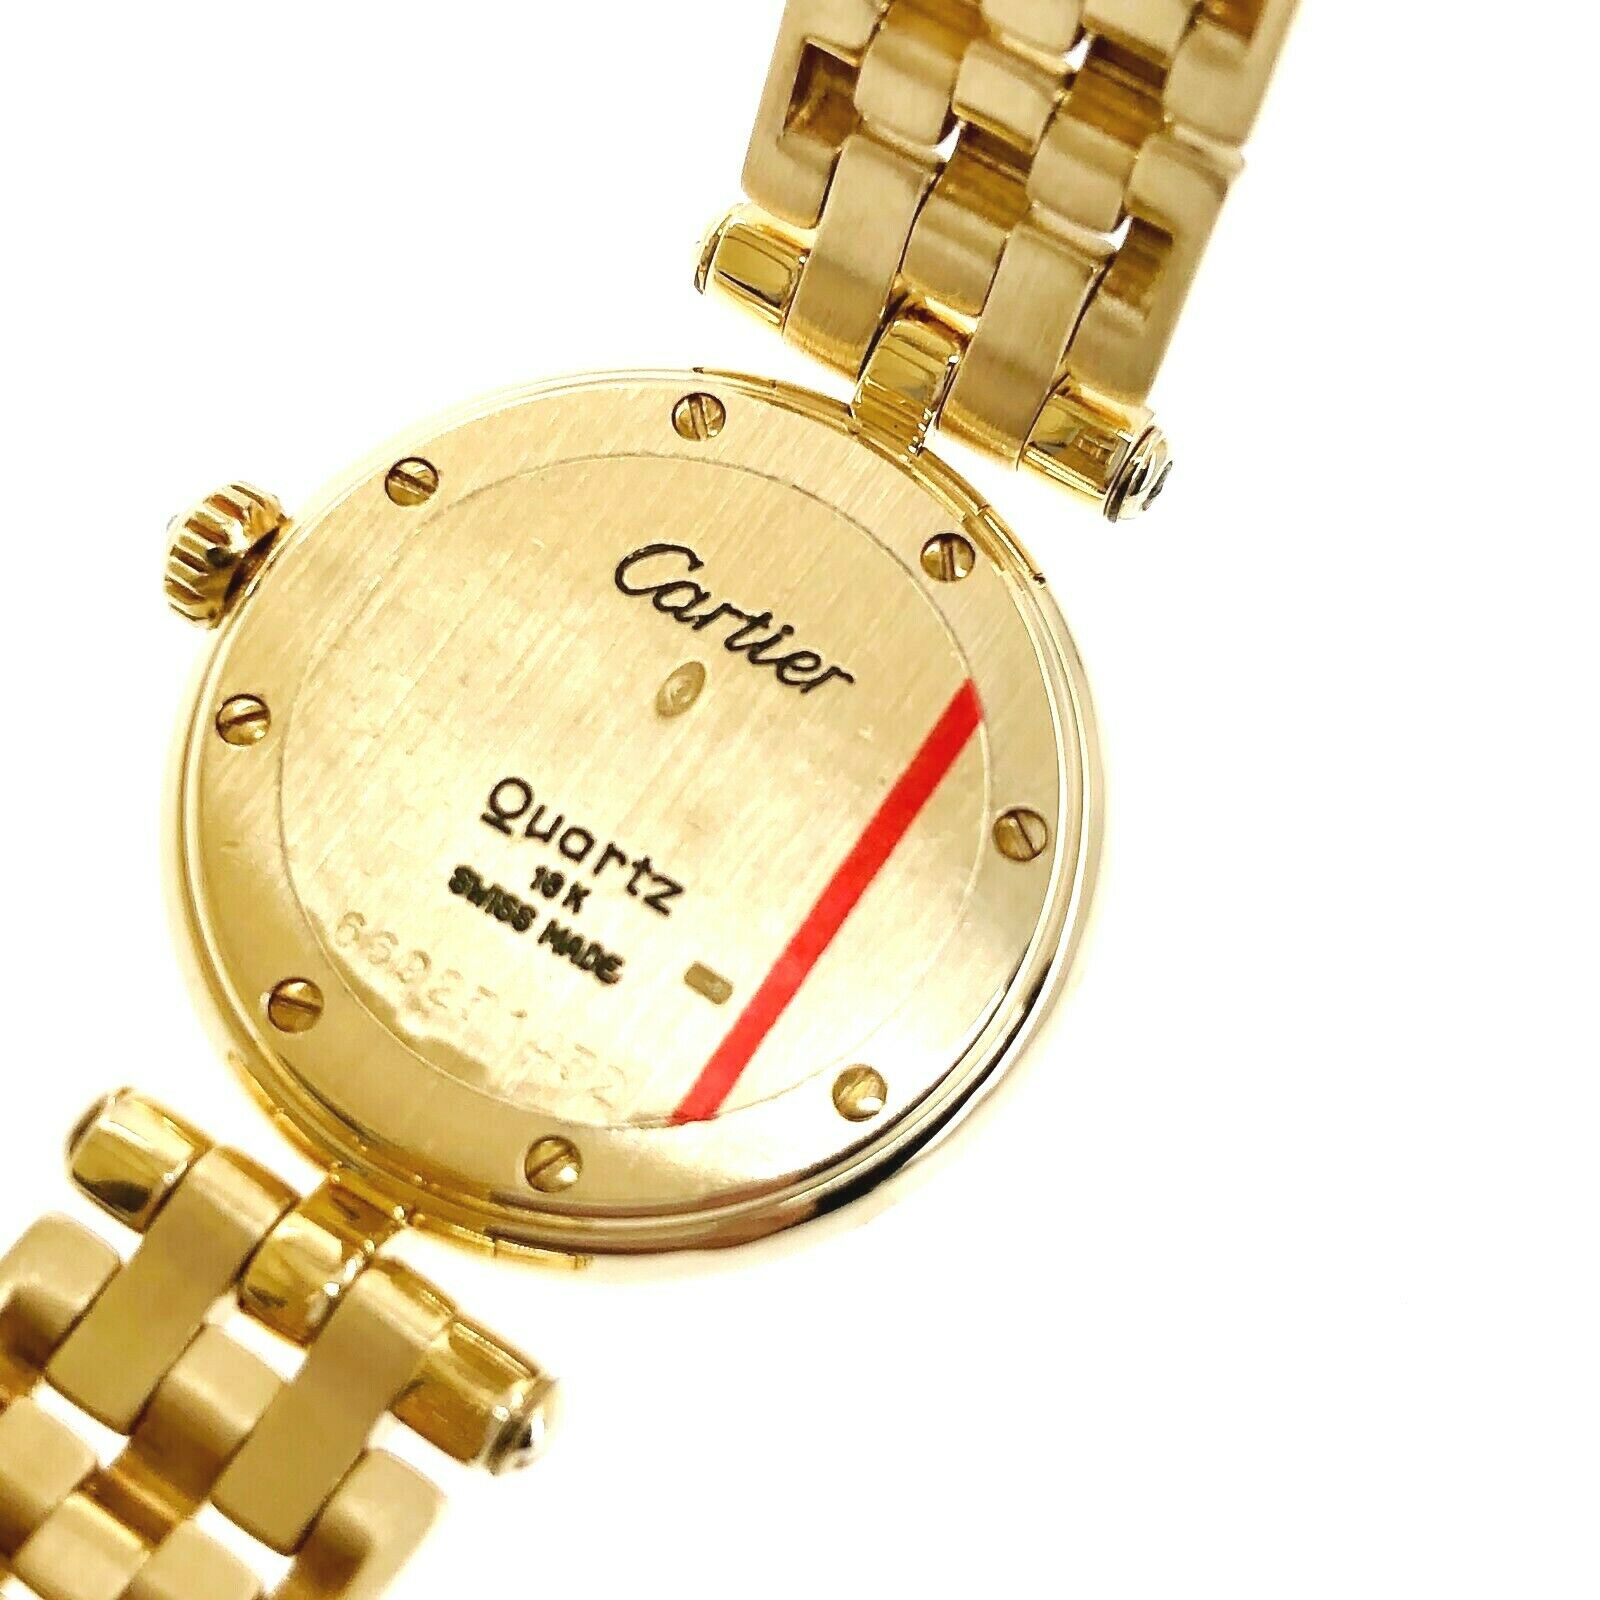 Cartier Panthere Ronde Factory Set Diamond Quartz Watch Solid 18K Yellow Gold